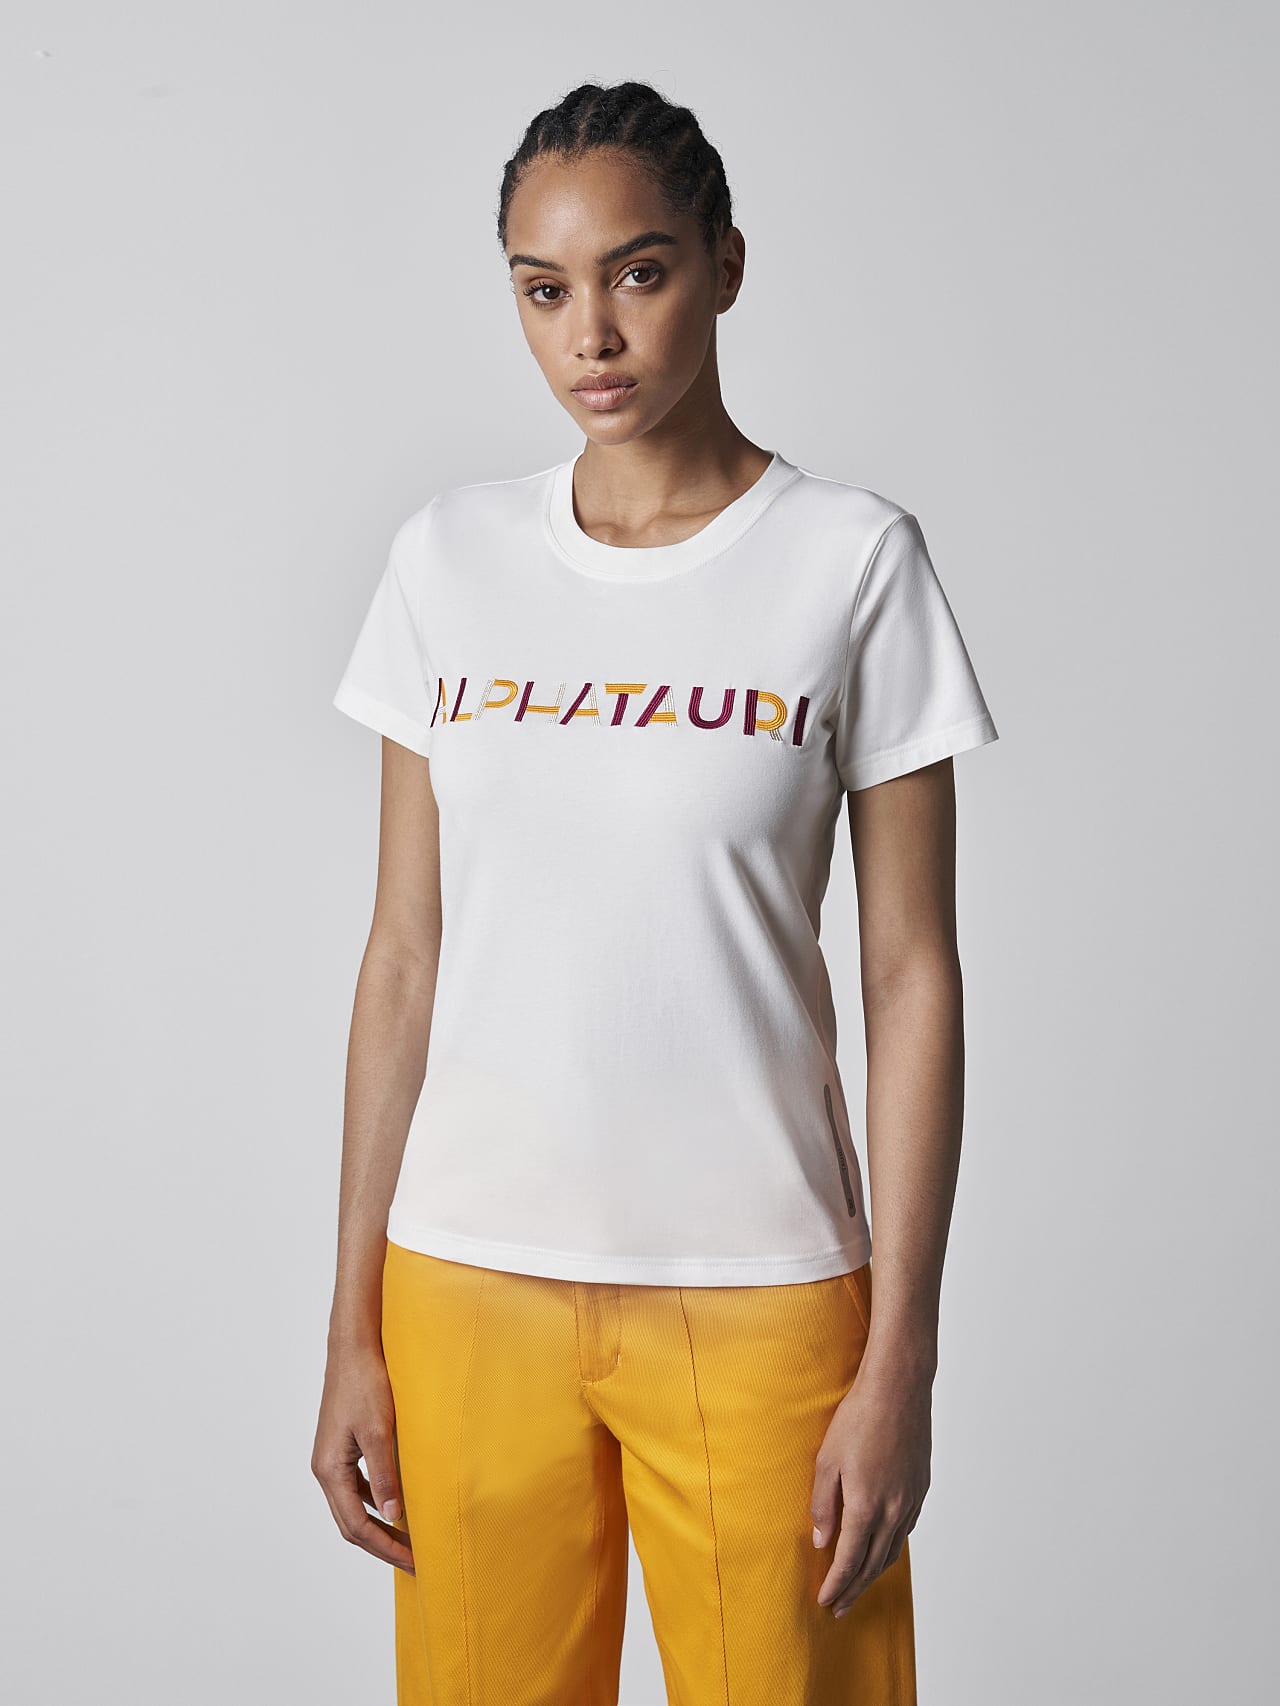 AlphaTauri | JOCTI V3.Y5.02 | Logo T-Shirt in offwhite for Women